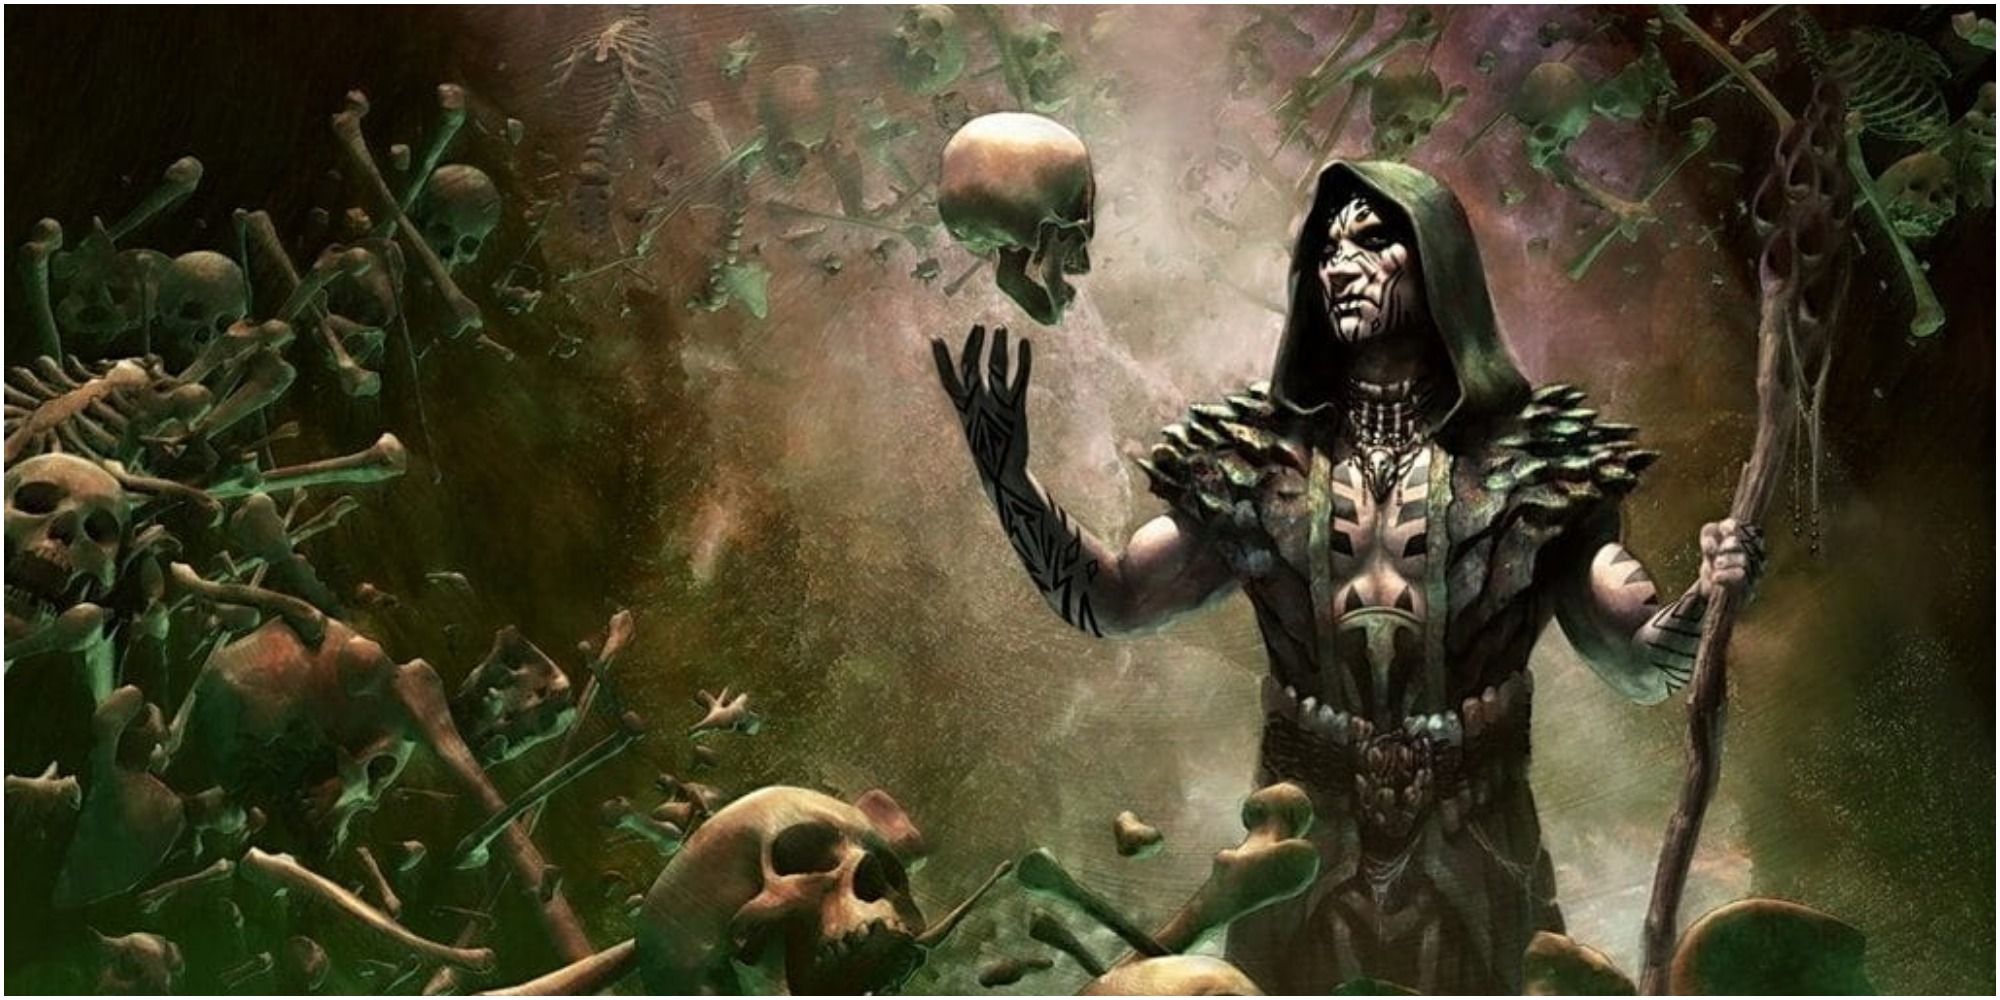 A dnd druid holding a levitating skull